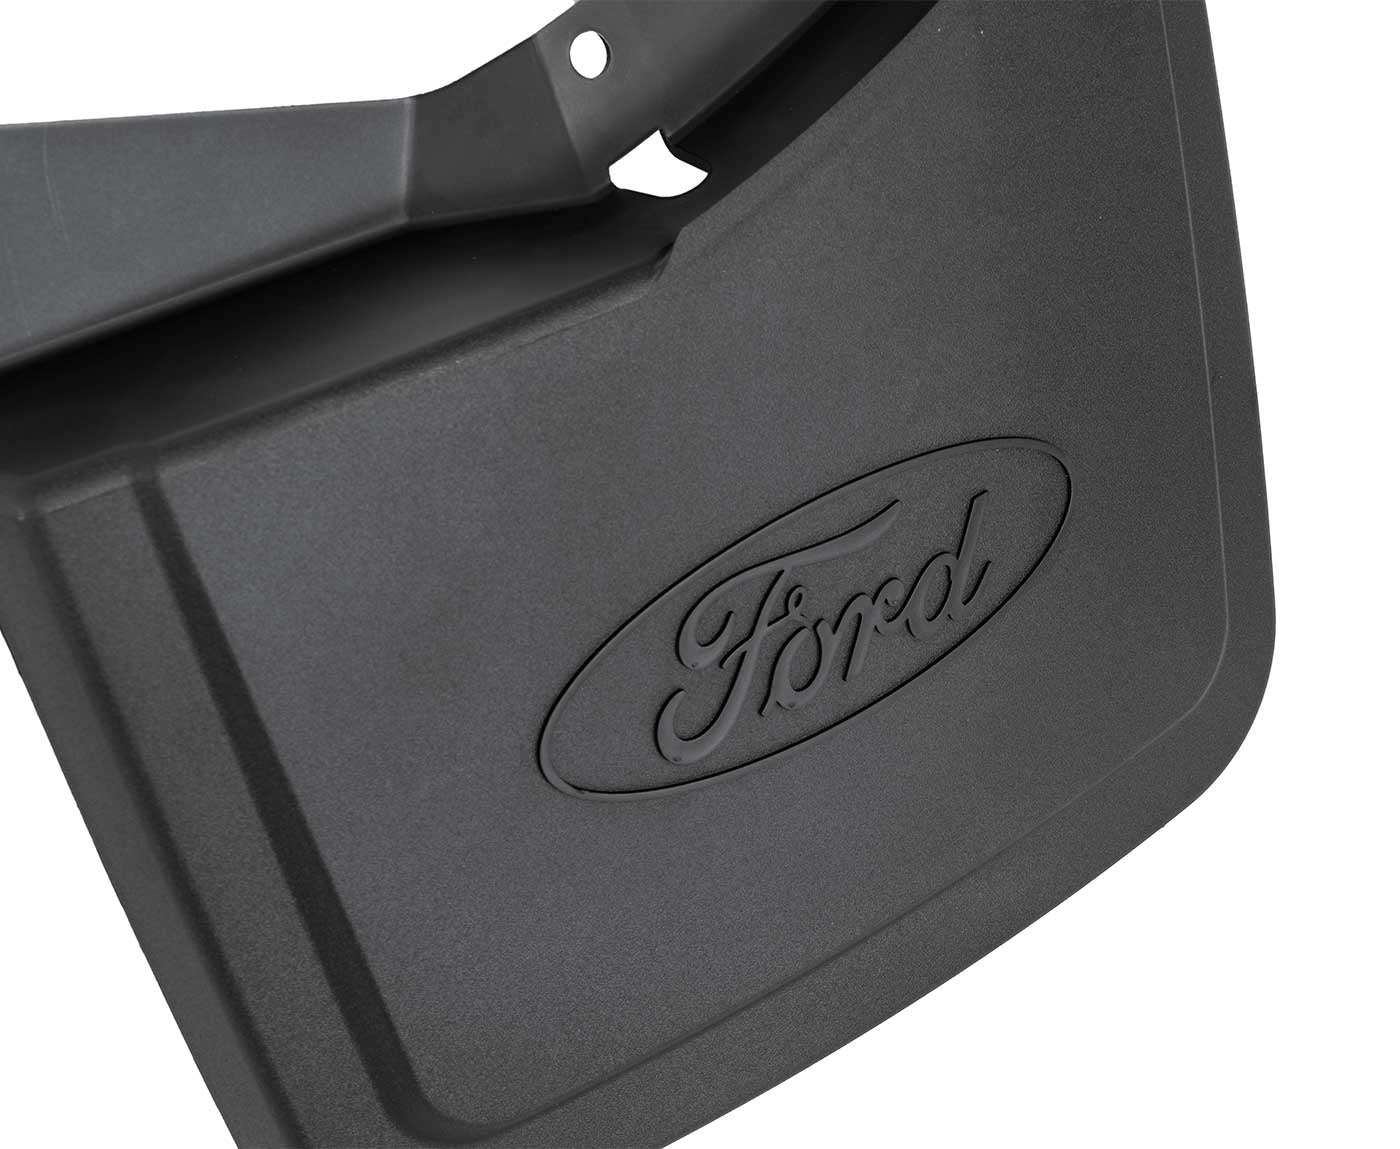 2021 Ford Ford F-150 OEM Black Front & Rear Mud Flaps Splash Guards - Set of 4